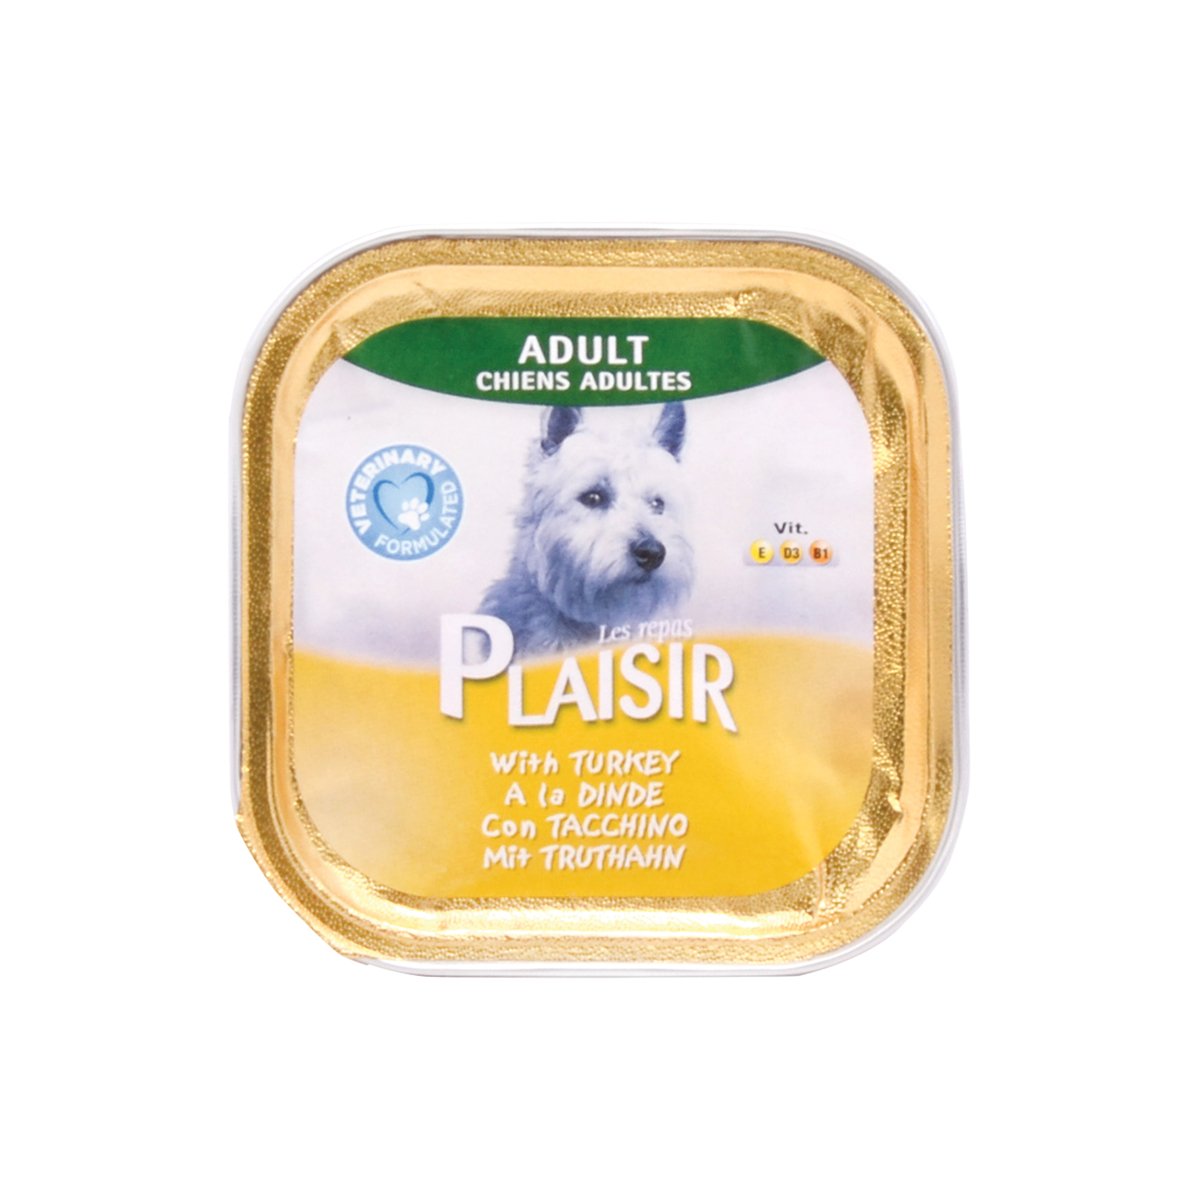 Plaisir Pate with Turkey Dog Food 150g